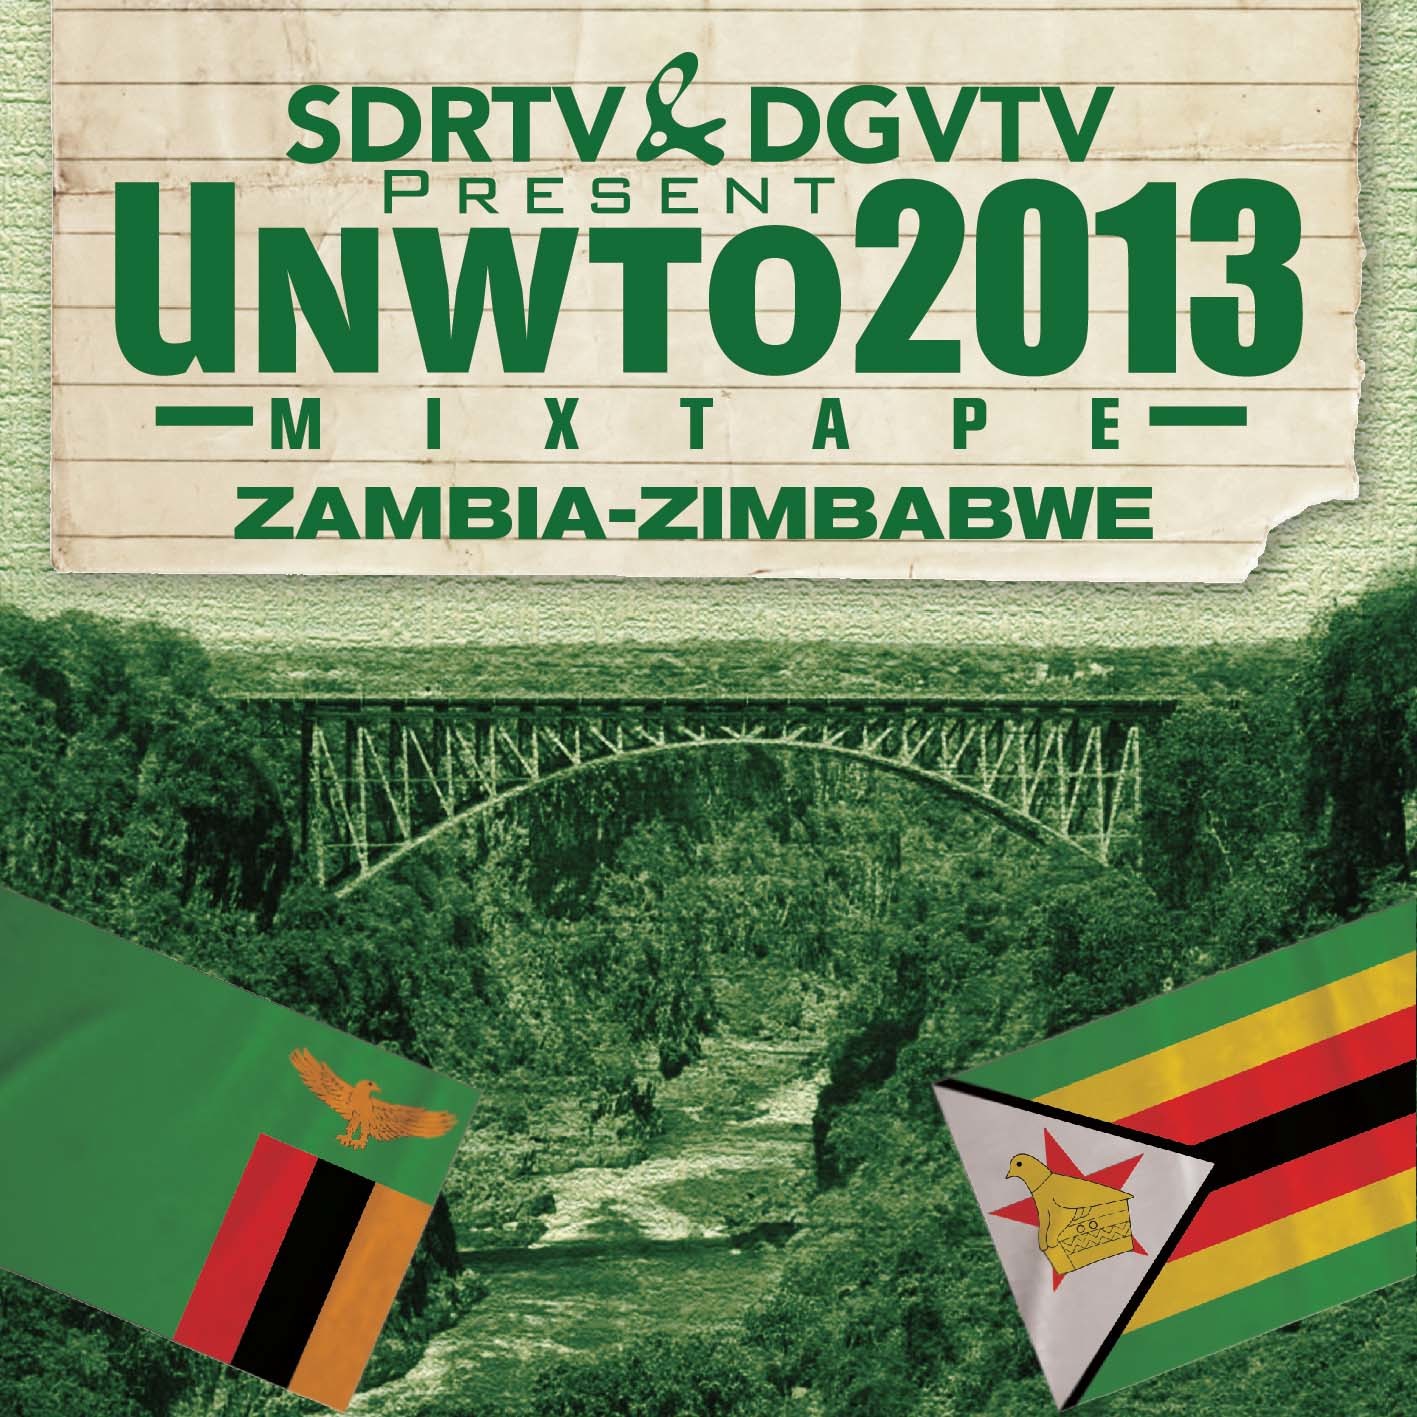 SDRTV & DGVTV Present UNWTO 2013 Mixtape (Zambia - Zimbabwe)